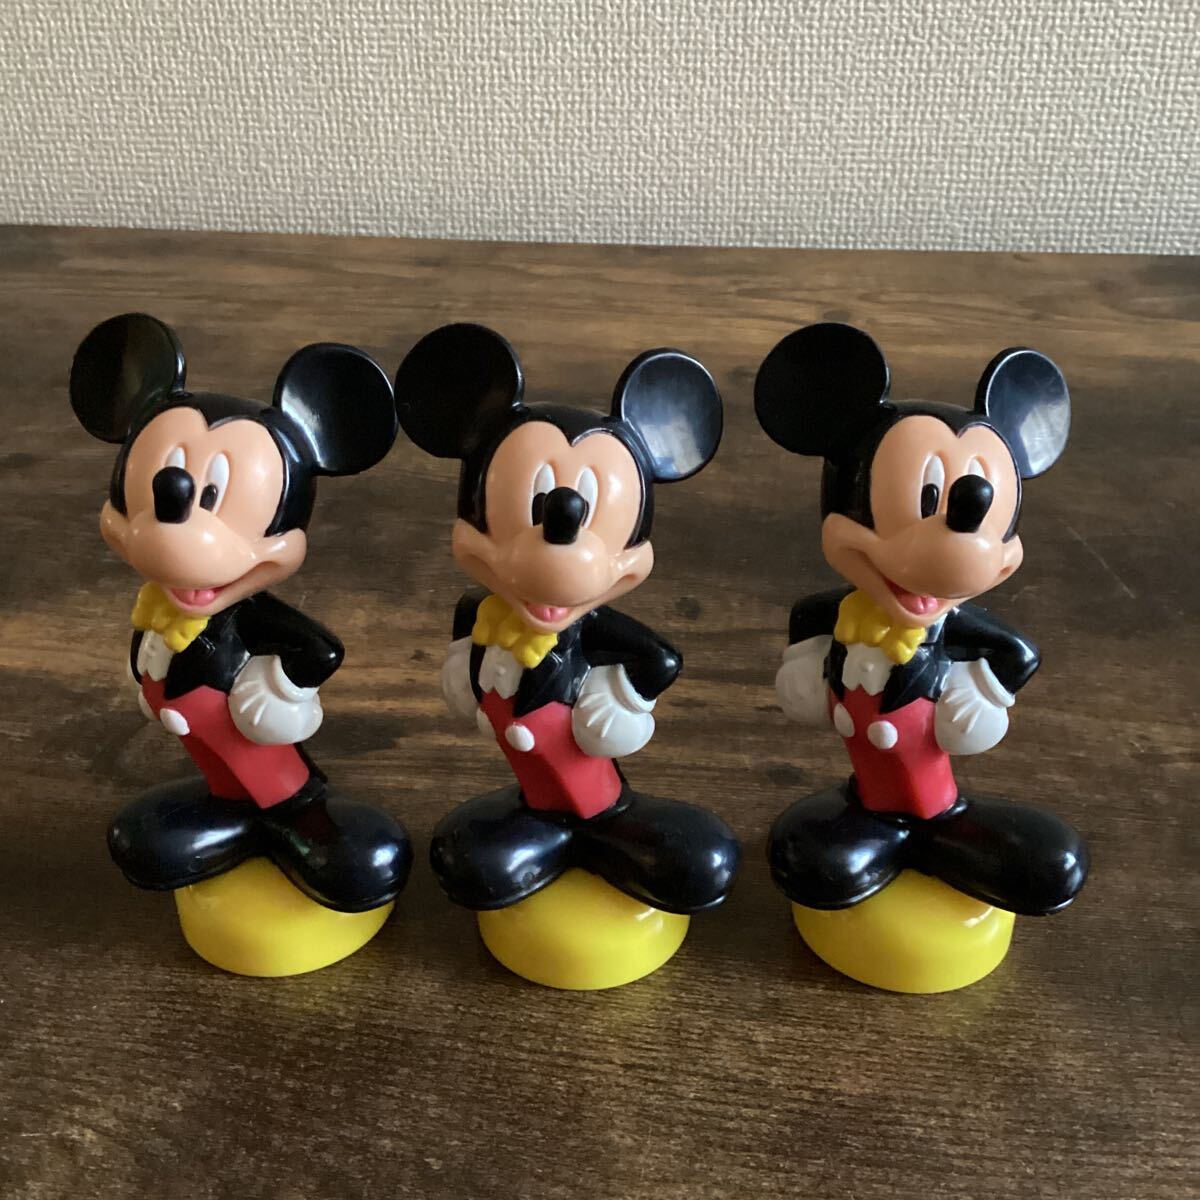 K1251) Disney Mickey фигурка продажа комплектом Mickey Mouse кукла общая длина примерно 12cm украшение интерьер б/у товар 